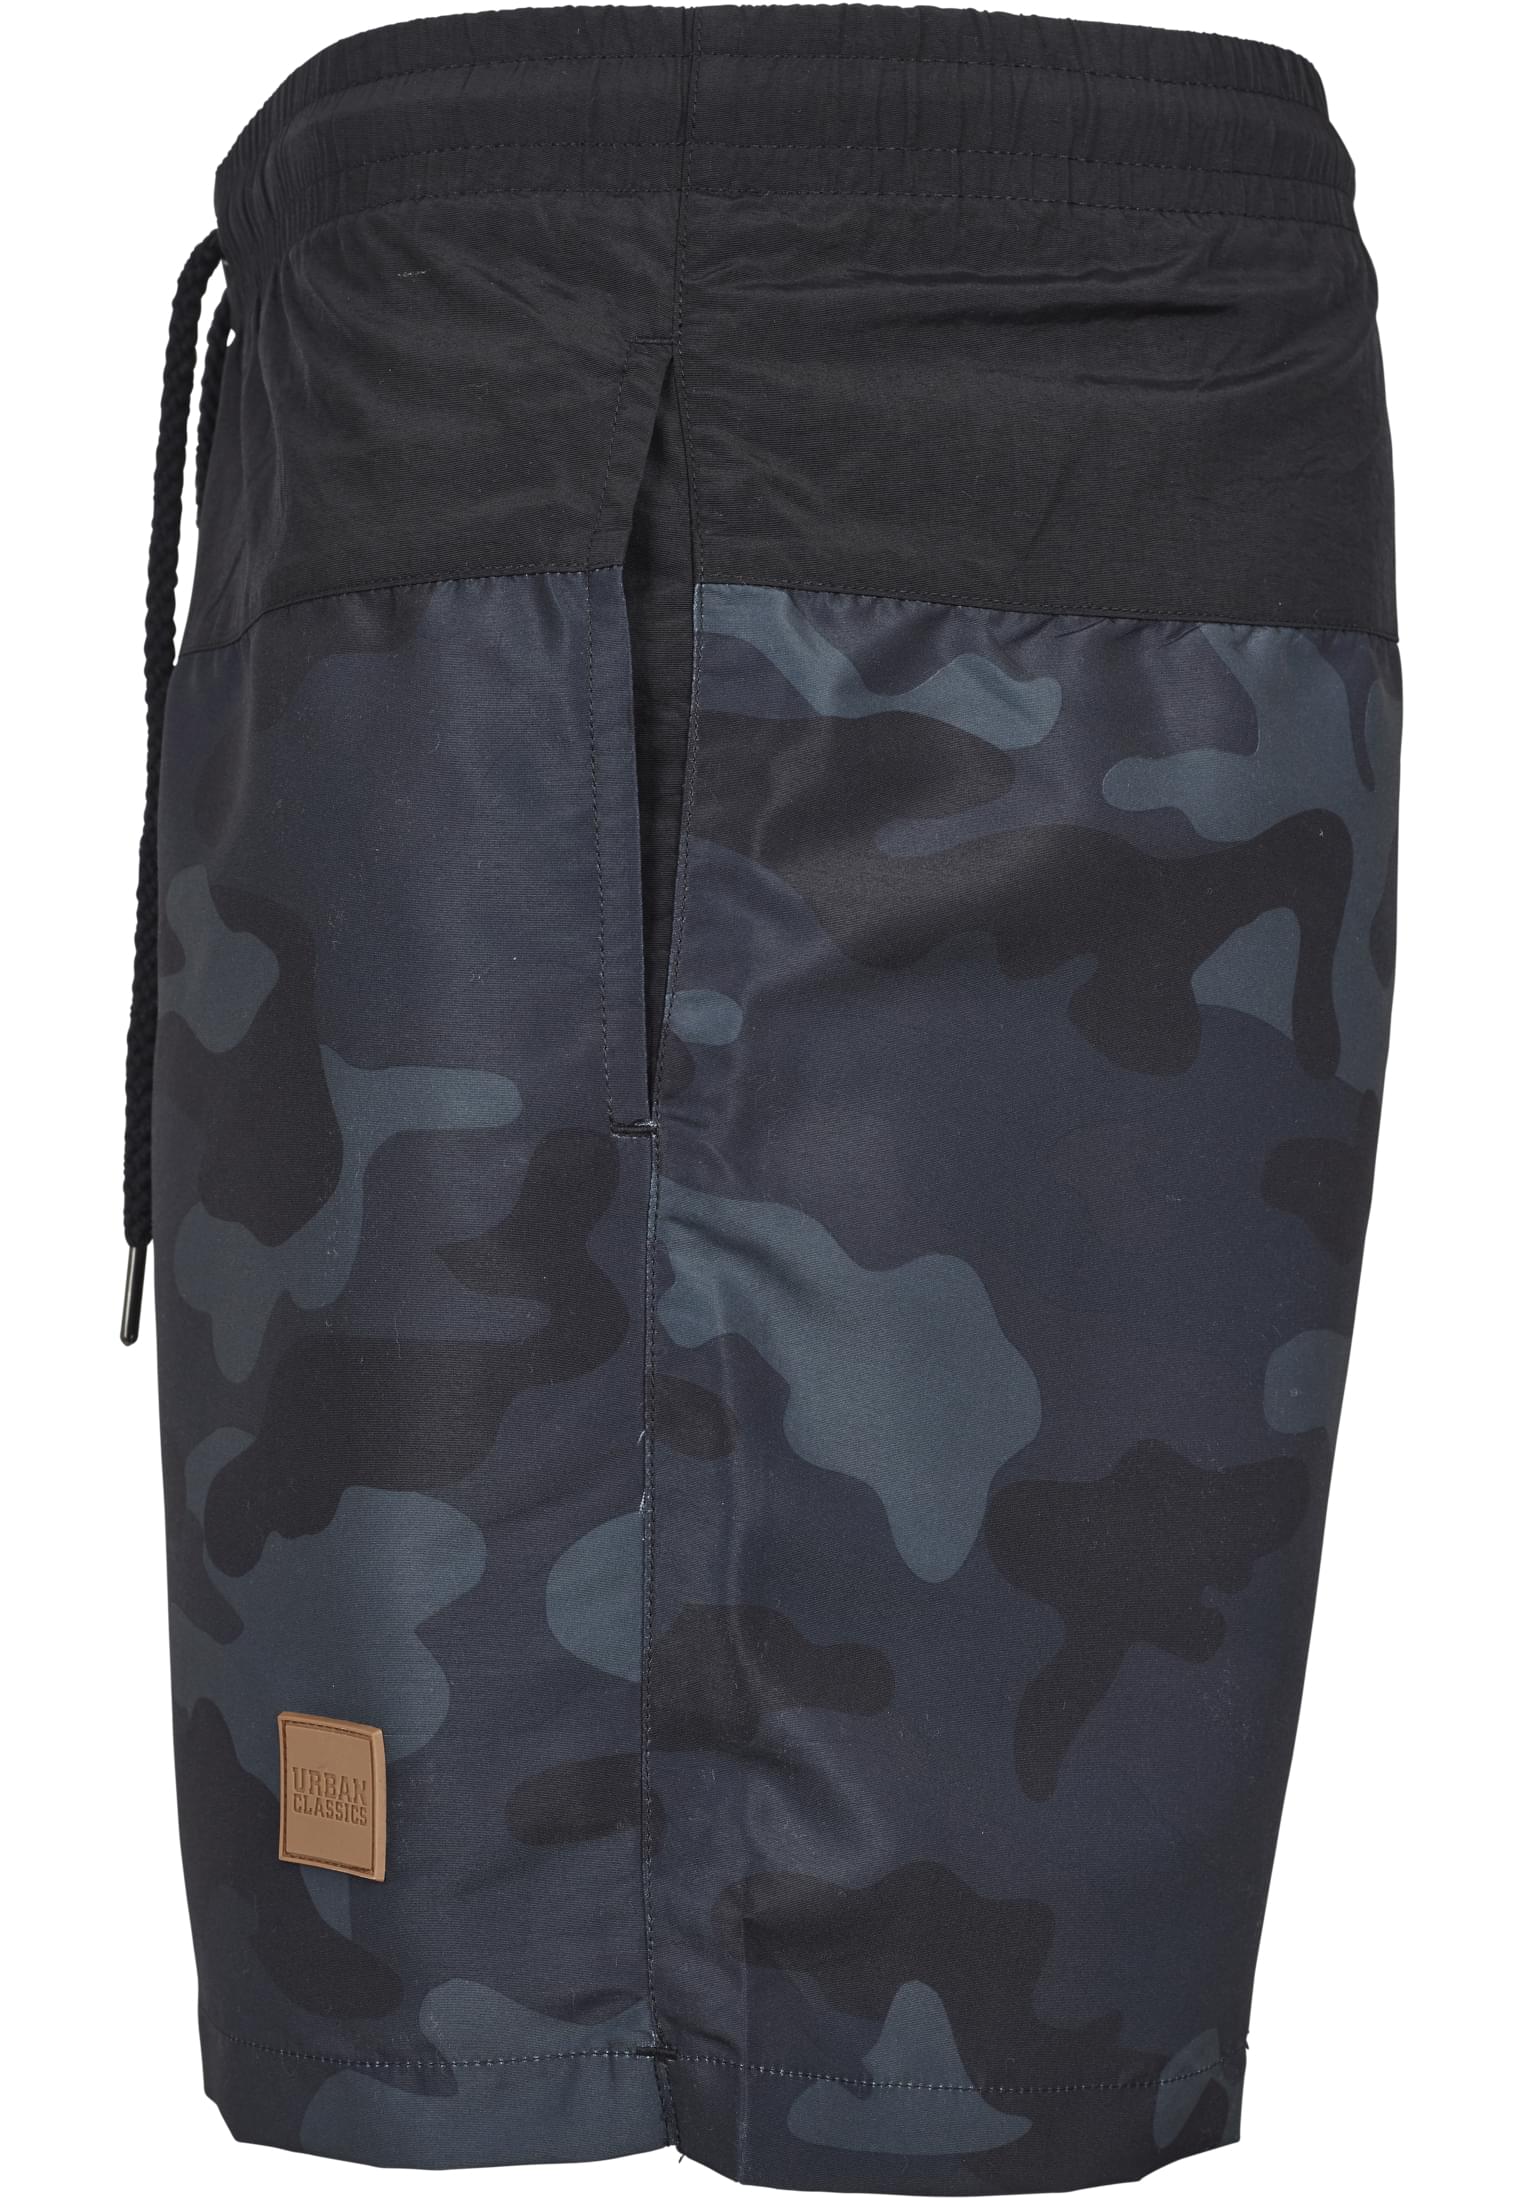 Plus Size Block Swim Shorts in Farbe blk/darkcamo